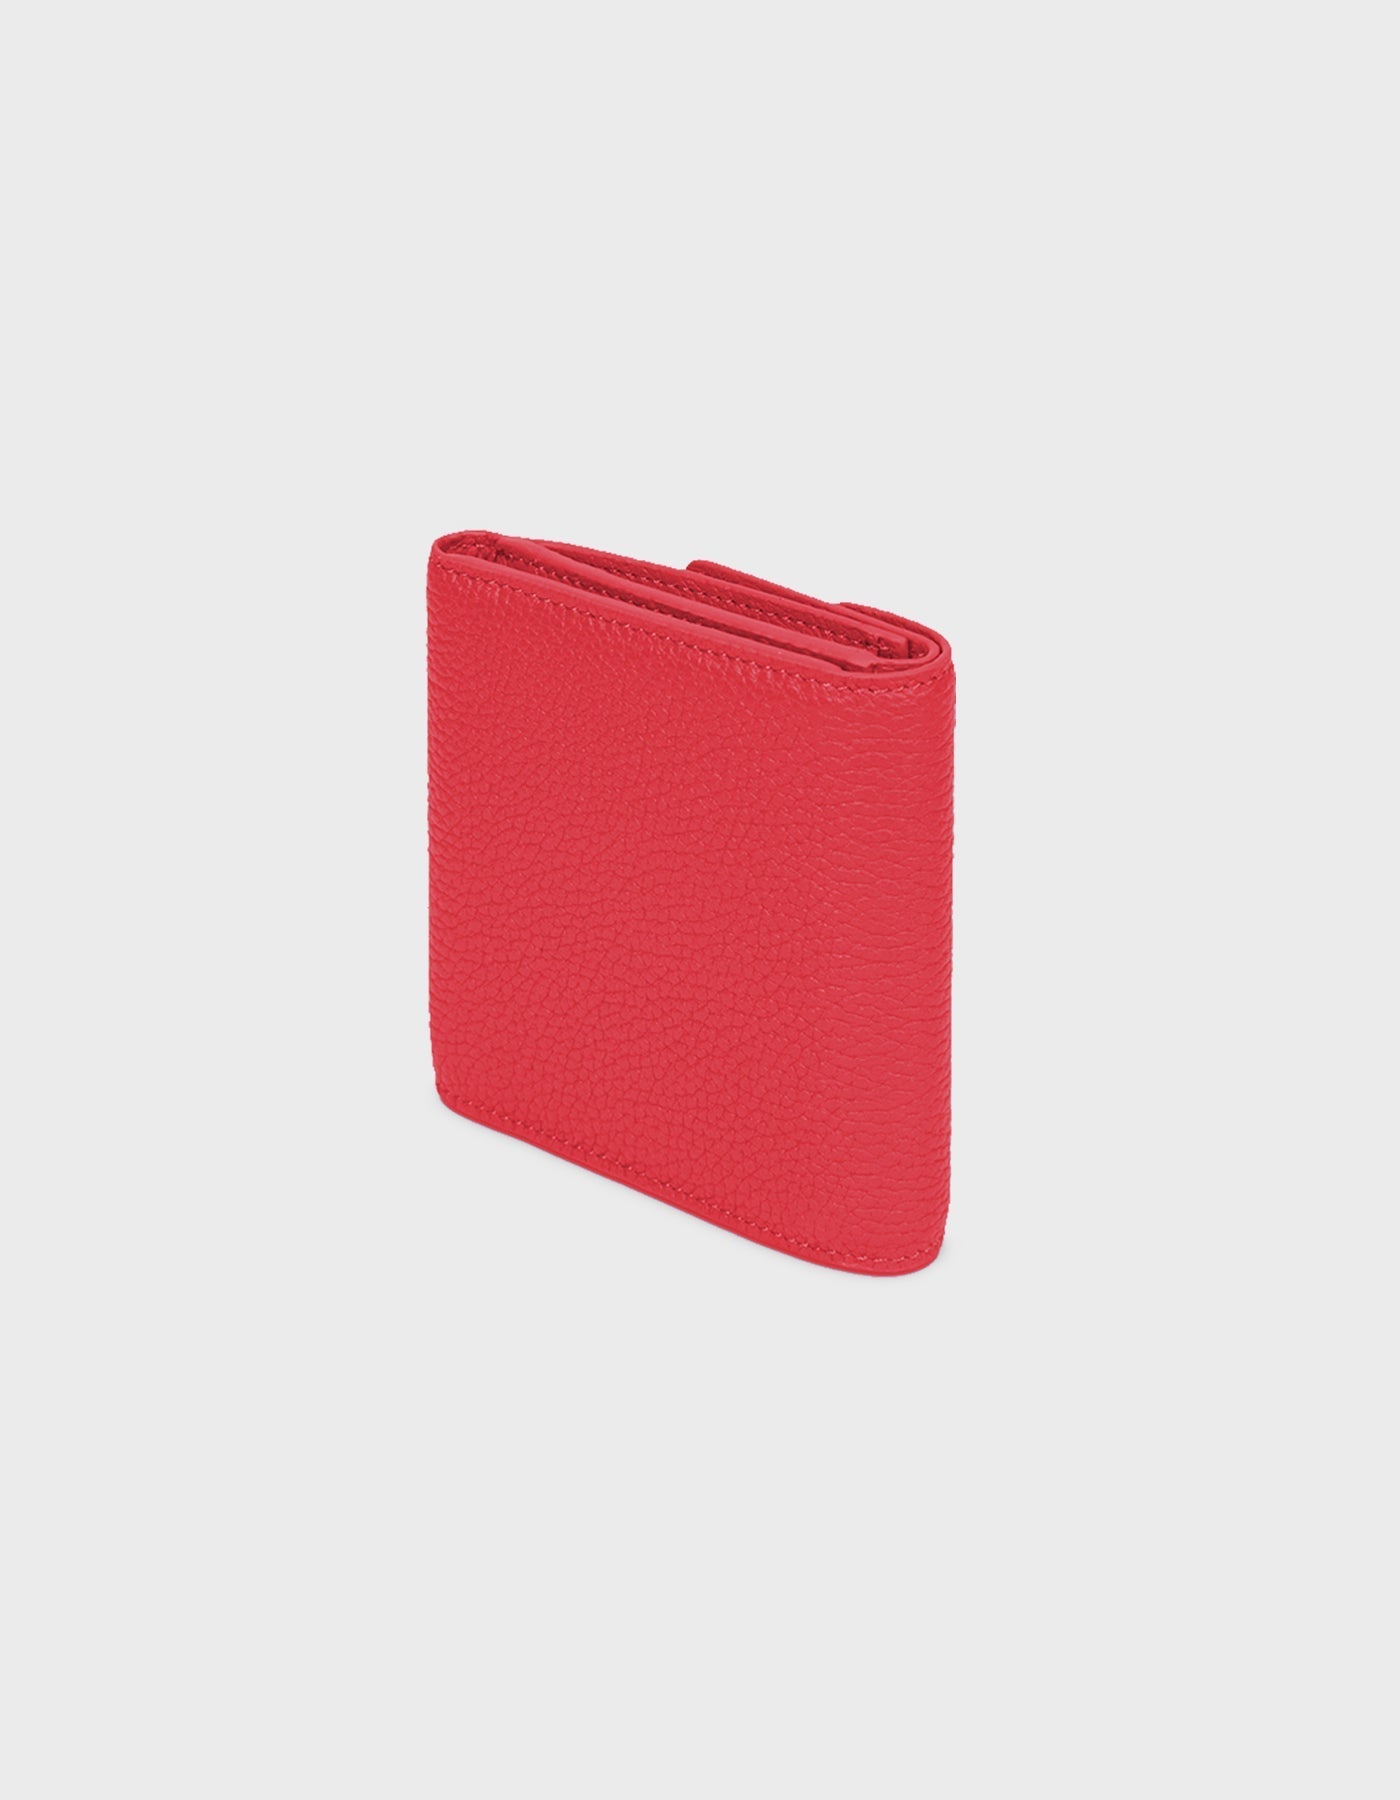 HiVa Atelier - Larus Compact Wallet Red